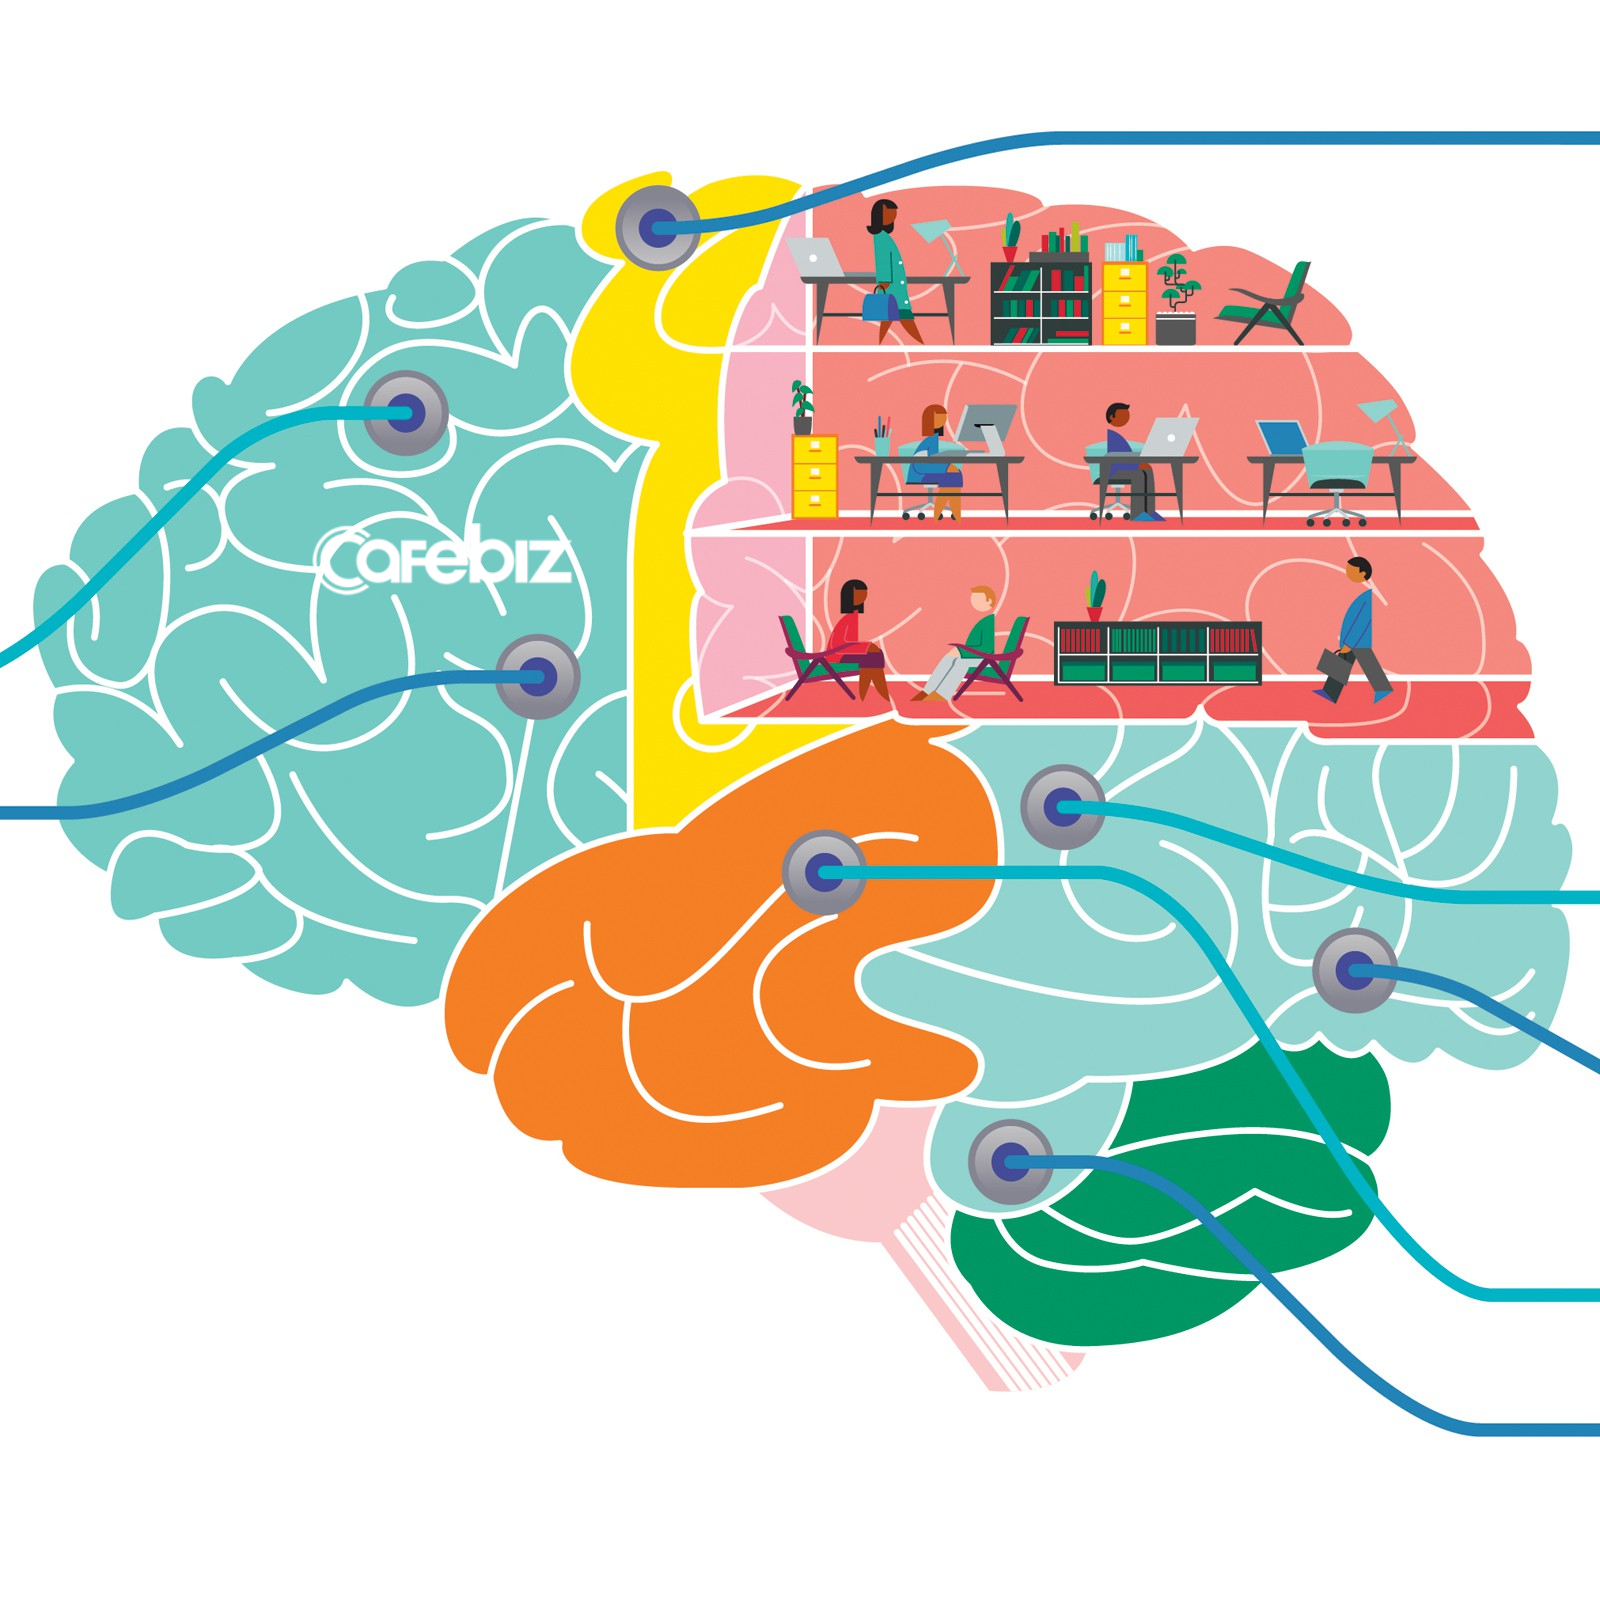 Brain capabilities. Паззлы для мозга. Мозг учеба. Логотипы с изображением мозга. Пазл головной мозг.